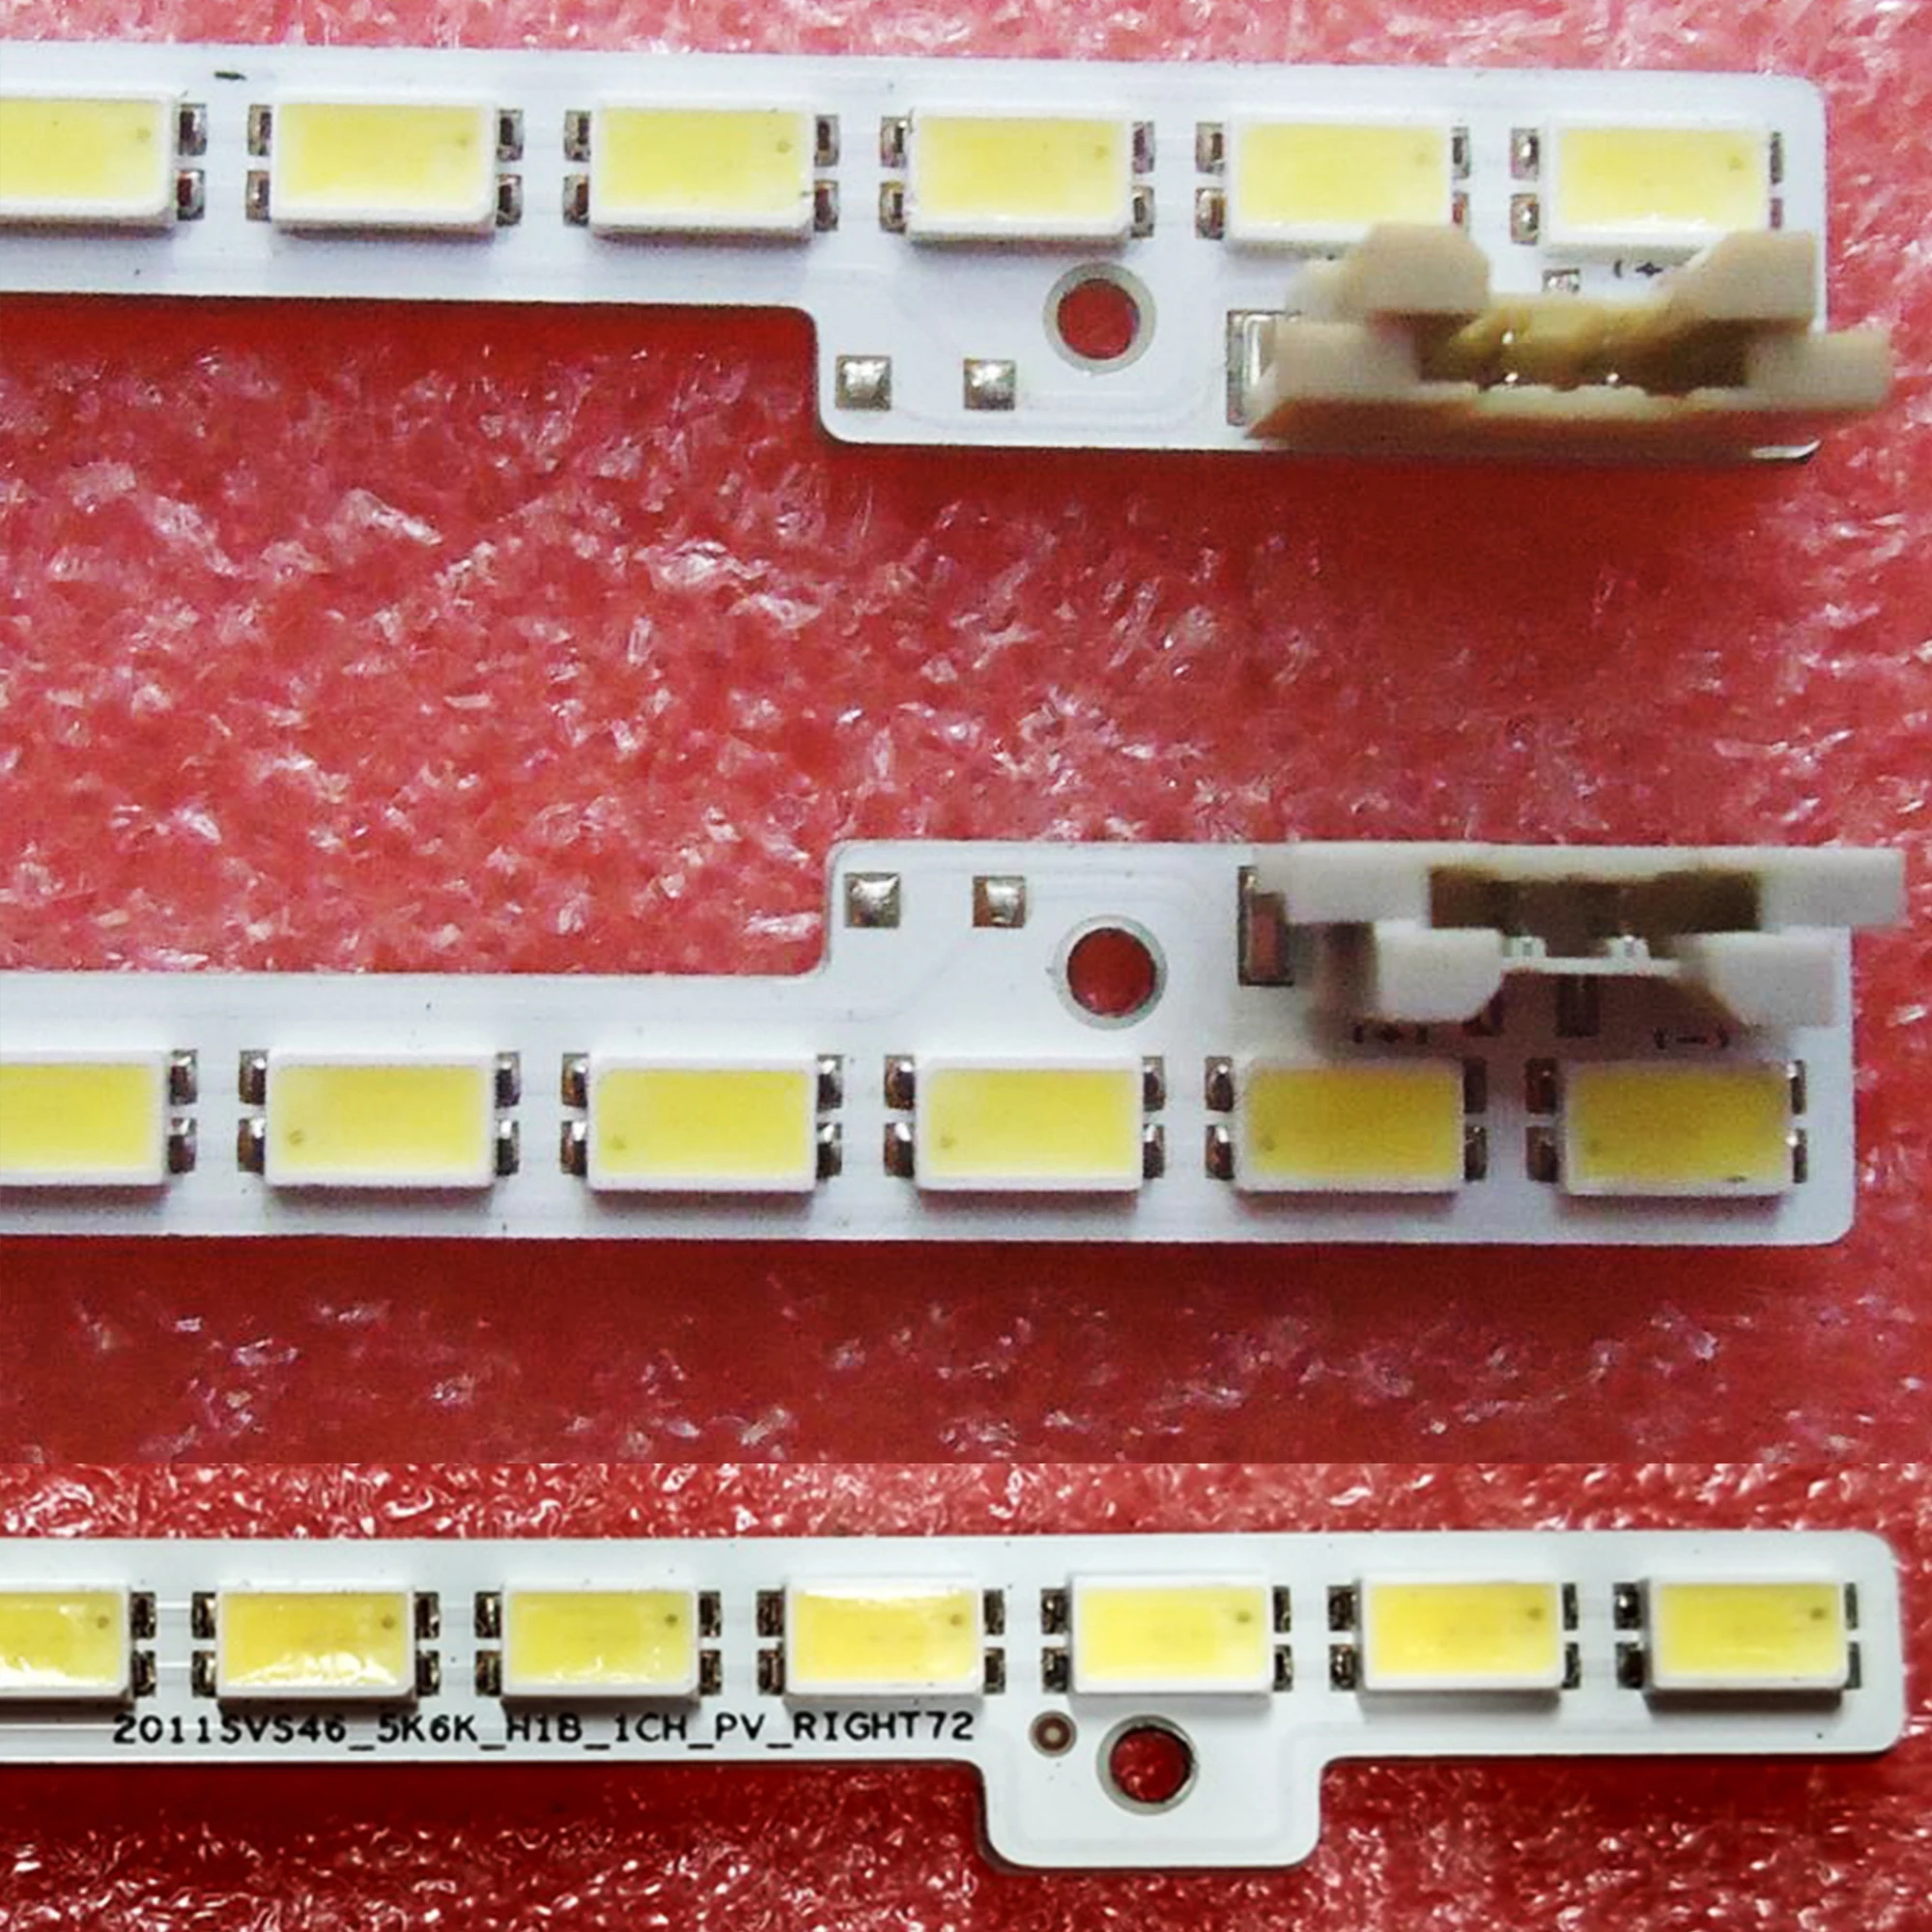 TV Lamps LED Backlight Strips For Samsung UE46D5000 UE46D5500 LED Bars 2011SVS46-FHD-5K6K-LEFT Bands Rulers 2011SVS46_5K6K_H1B tv s led array bars for samsung ue40h5500 ue40h5505 ue40h5300 ue40h5510 tv backlight led strip matrix lamps bands rulers bulbs